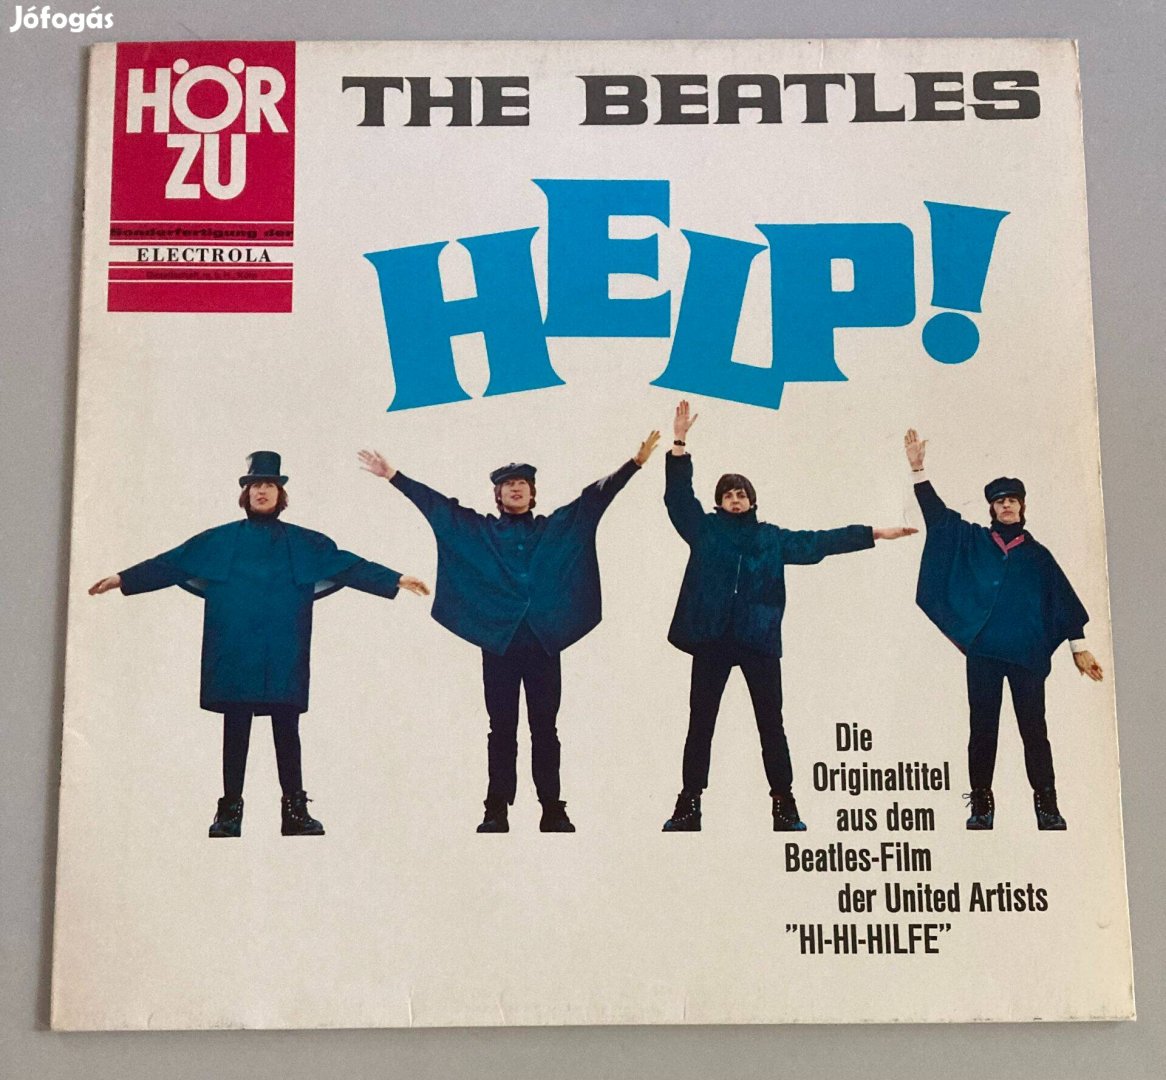 Beatles - HELP! (német, 1966, Hörzu Shze 162)